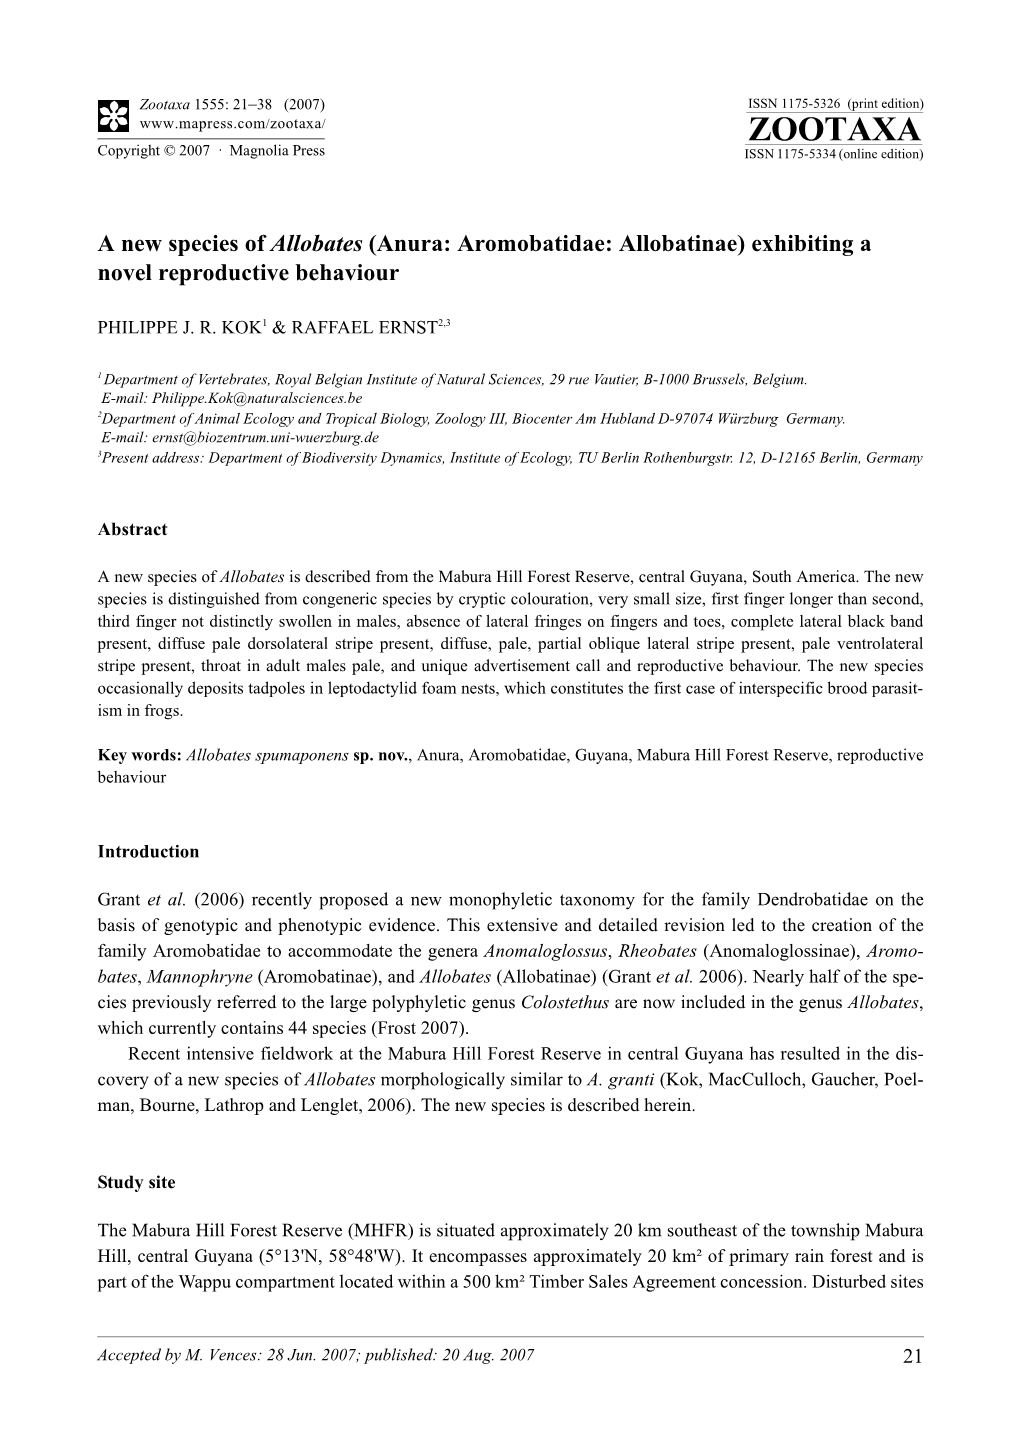 Zootaxa,A New Species of Allobates (Anura: Aromobatidae: Allobatinae)